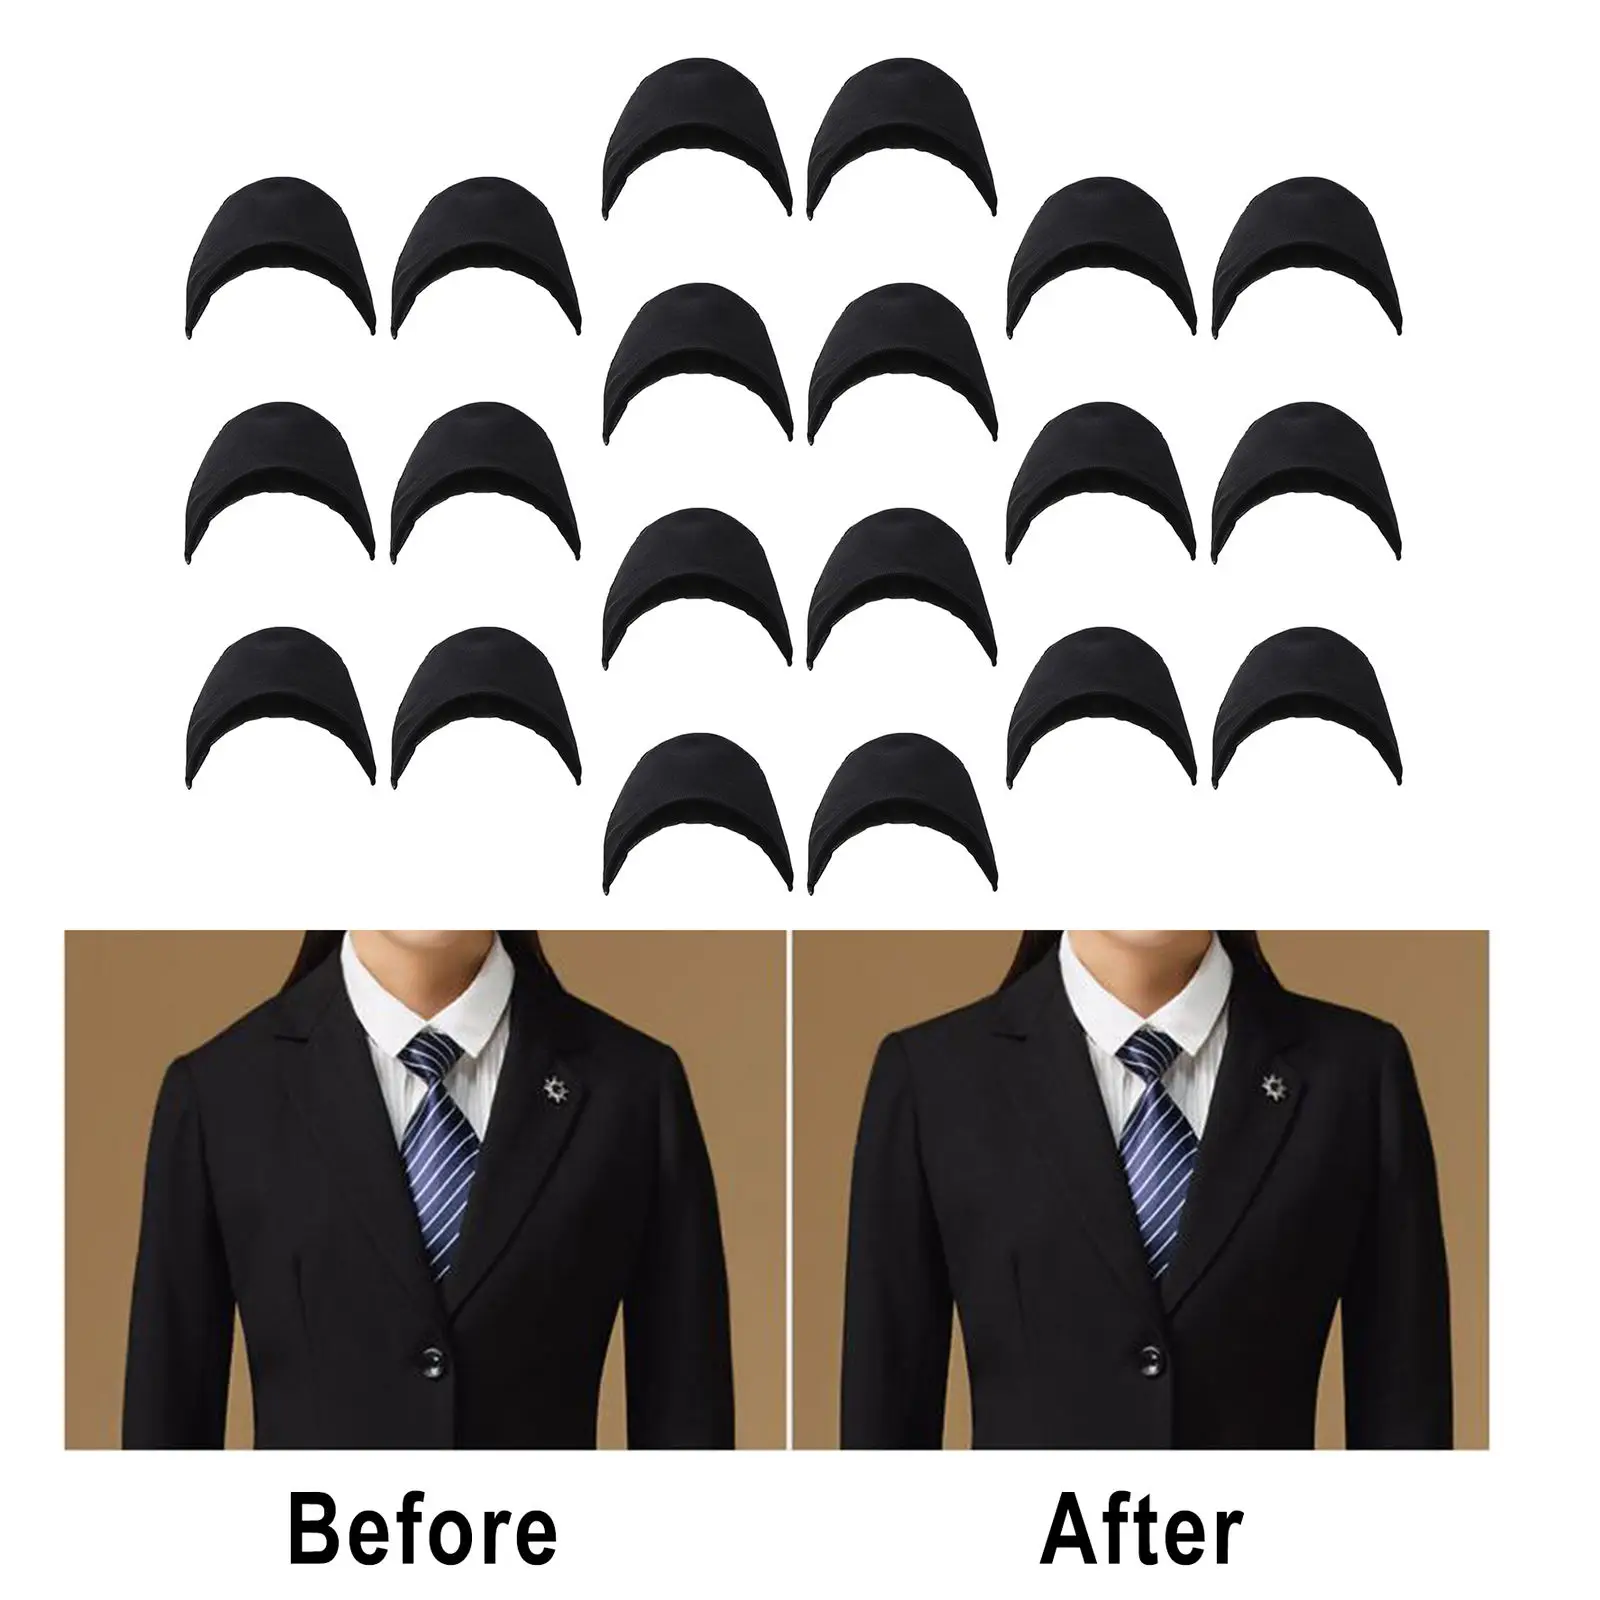 20 Pieces Shoulder Pads Cushions Shoulder Protectors Fit for Shirt Black Insert Non Slip for Dress Sewing Suit Coat Men Adults